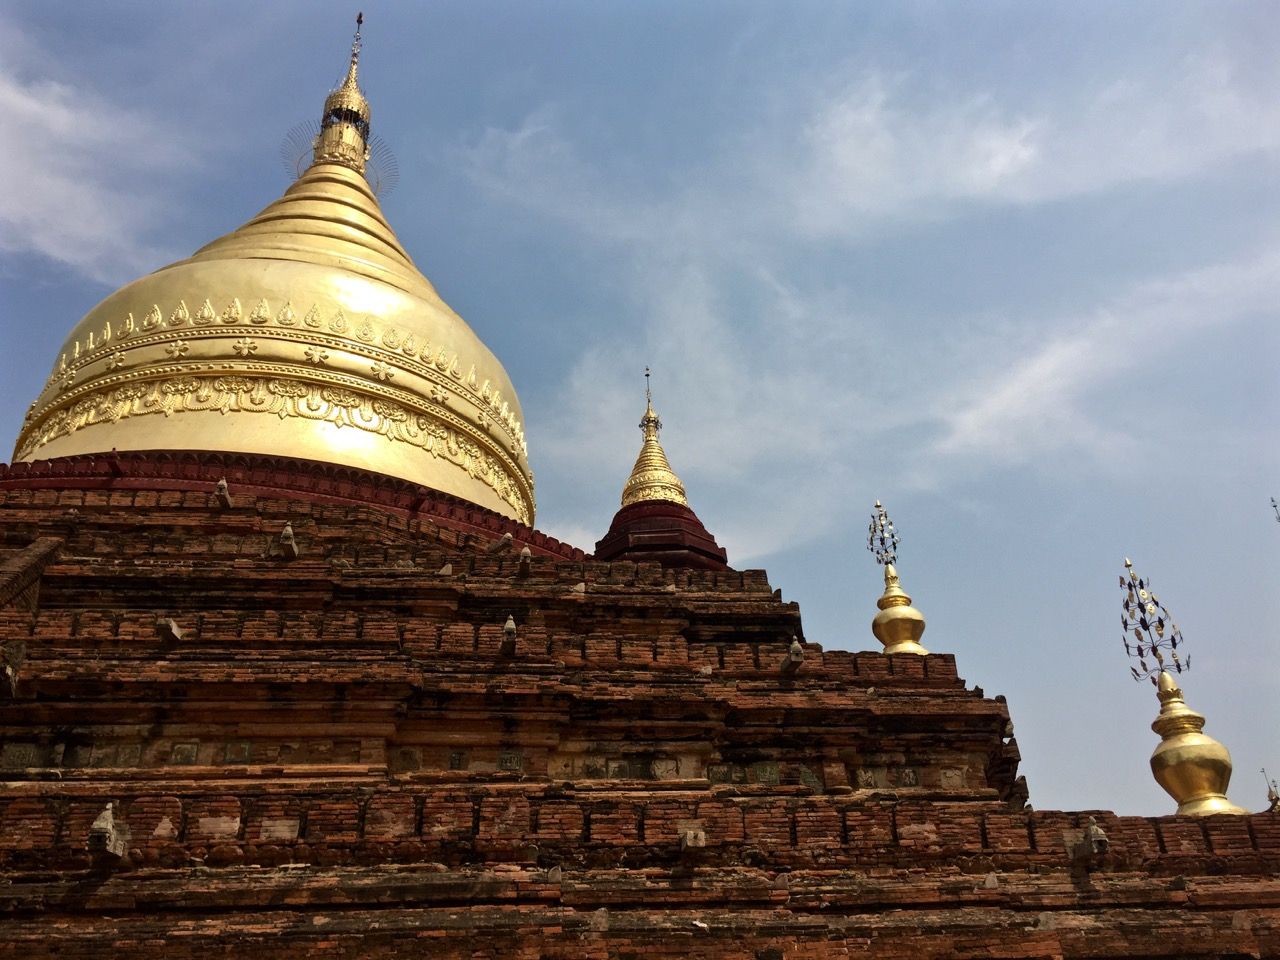 A row of increasingly large golden stupas.